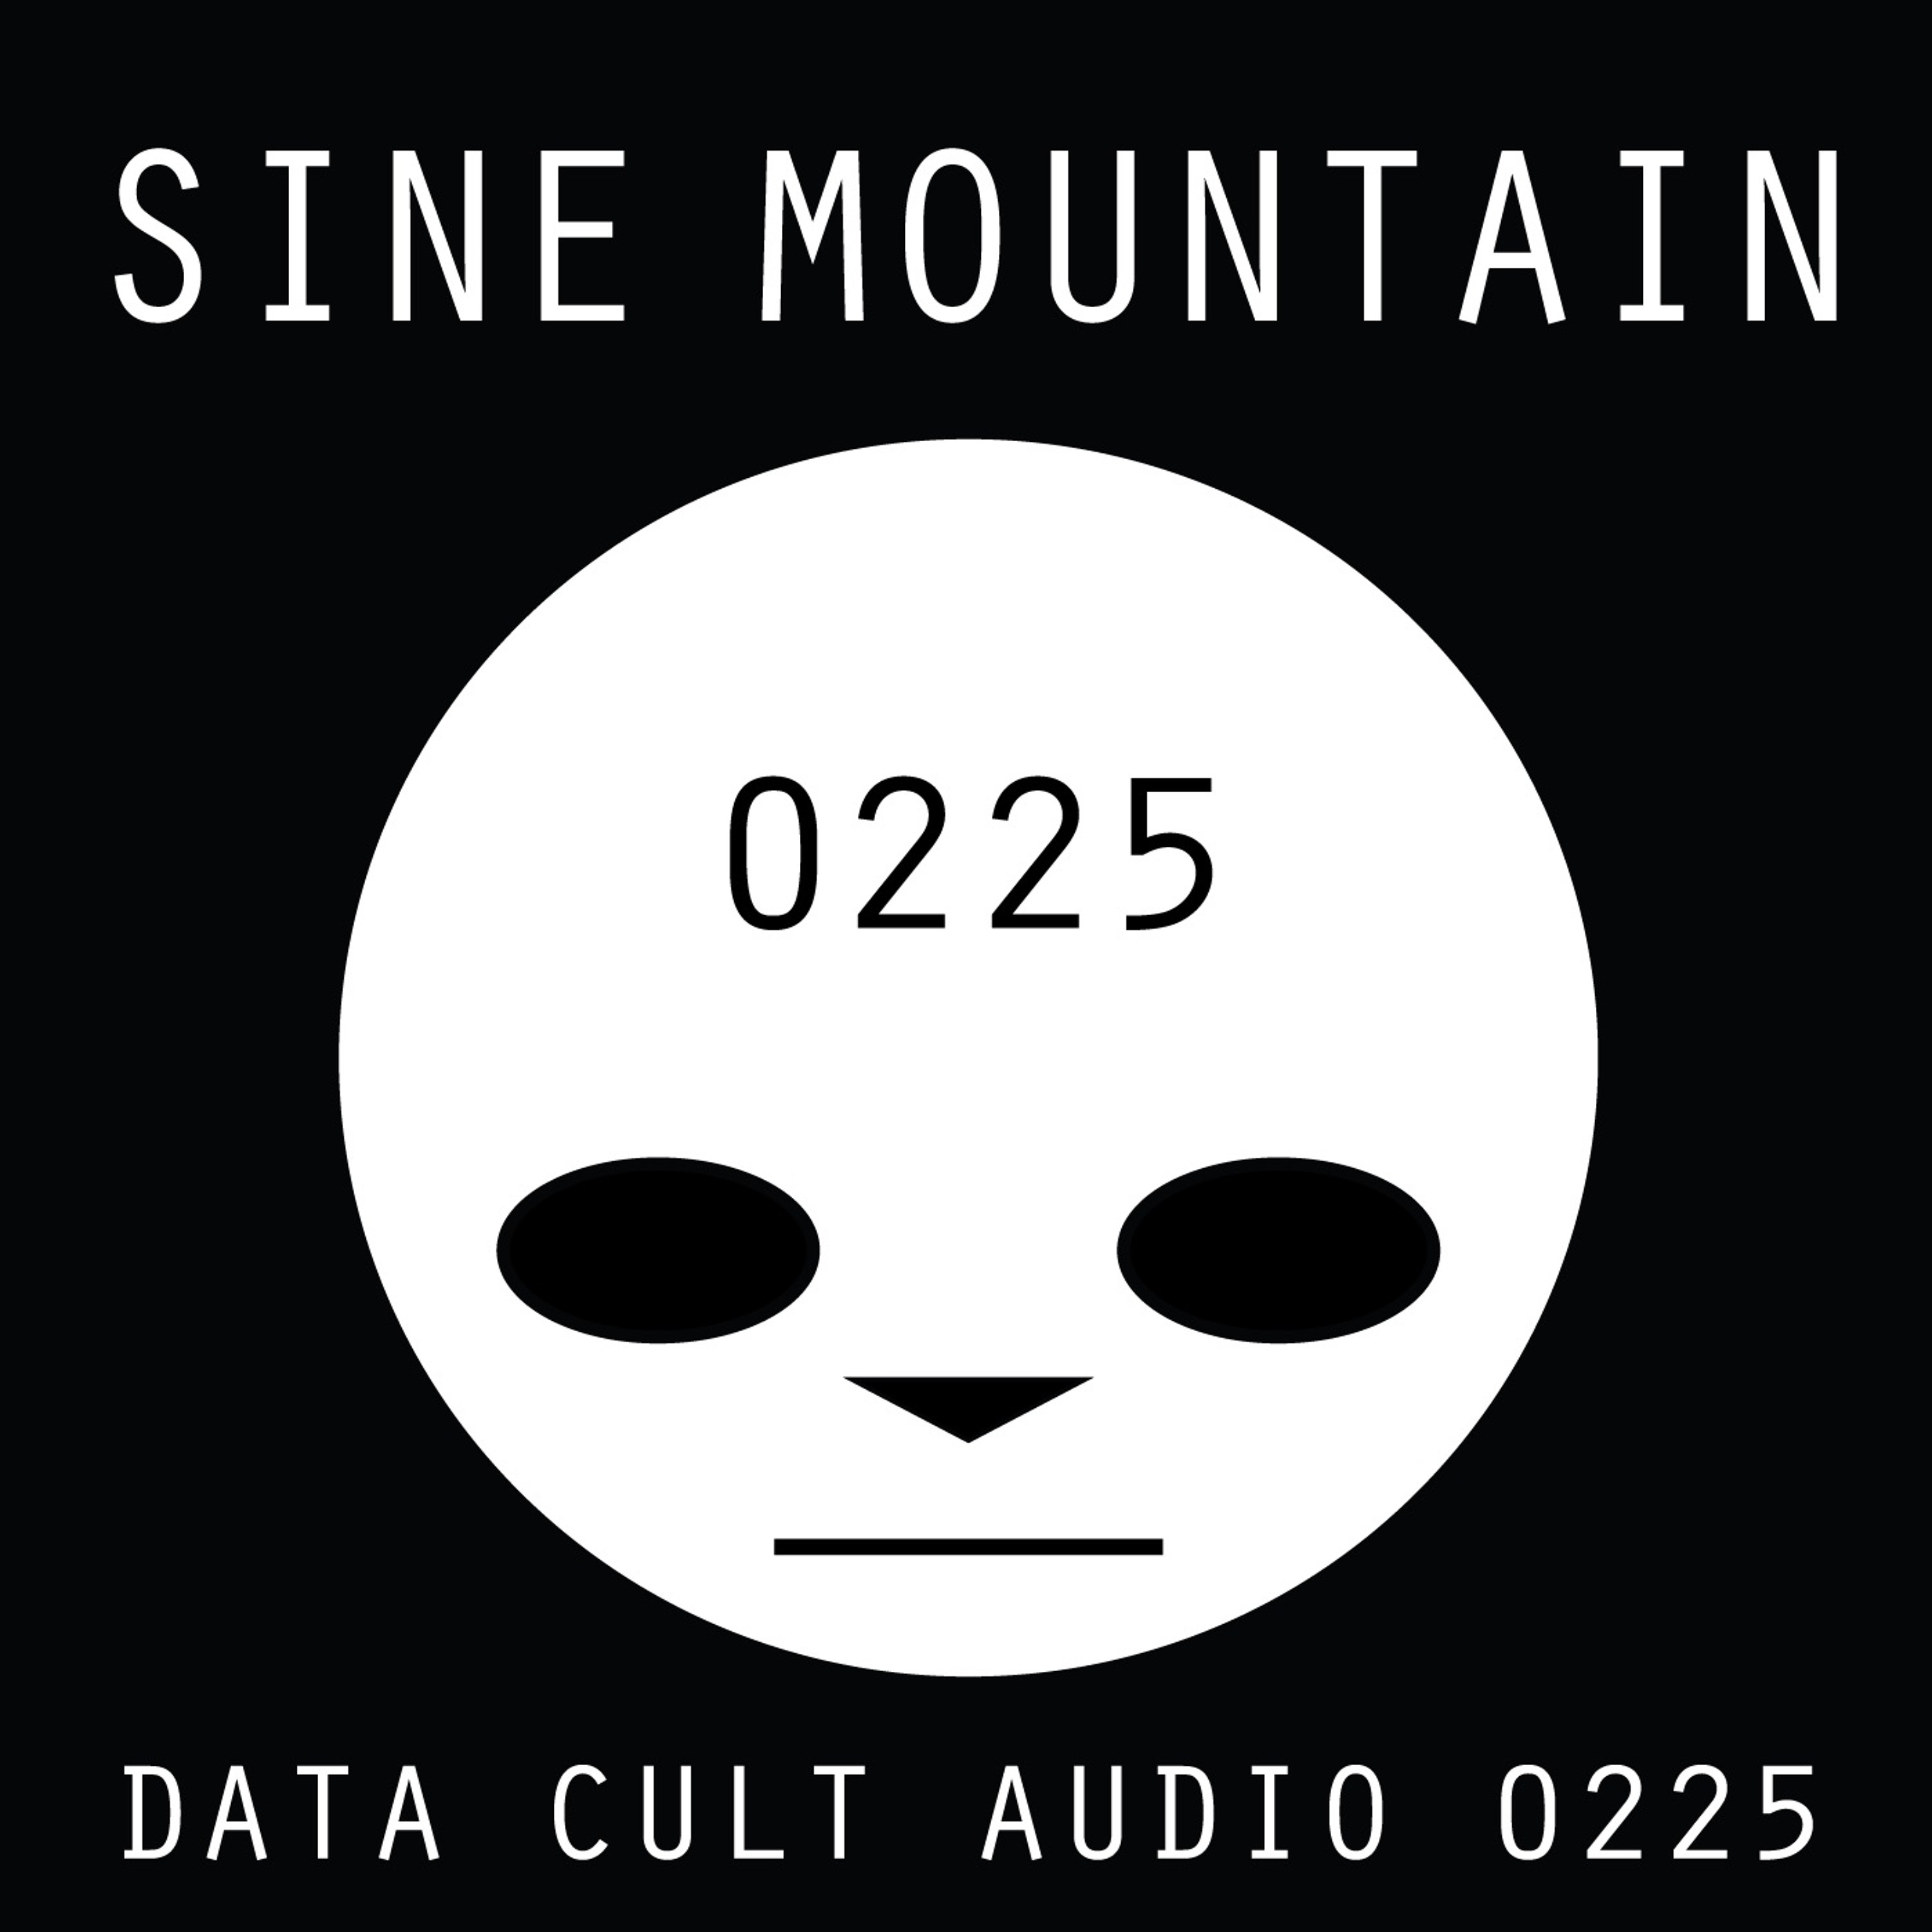 Data Cult Audio 0225 - Sine Mountain